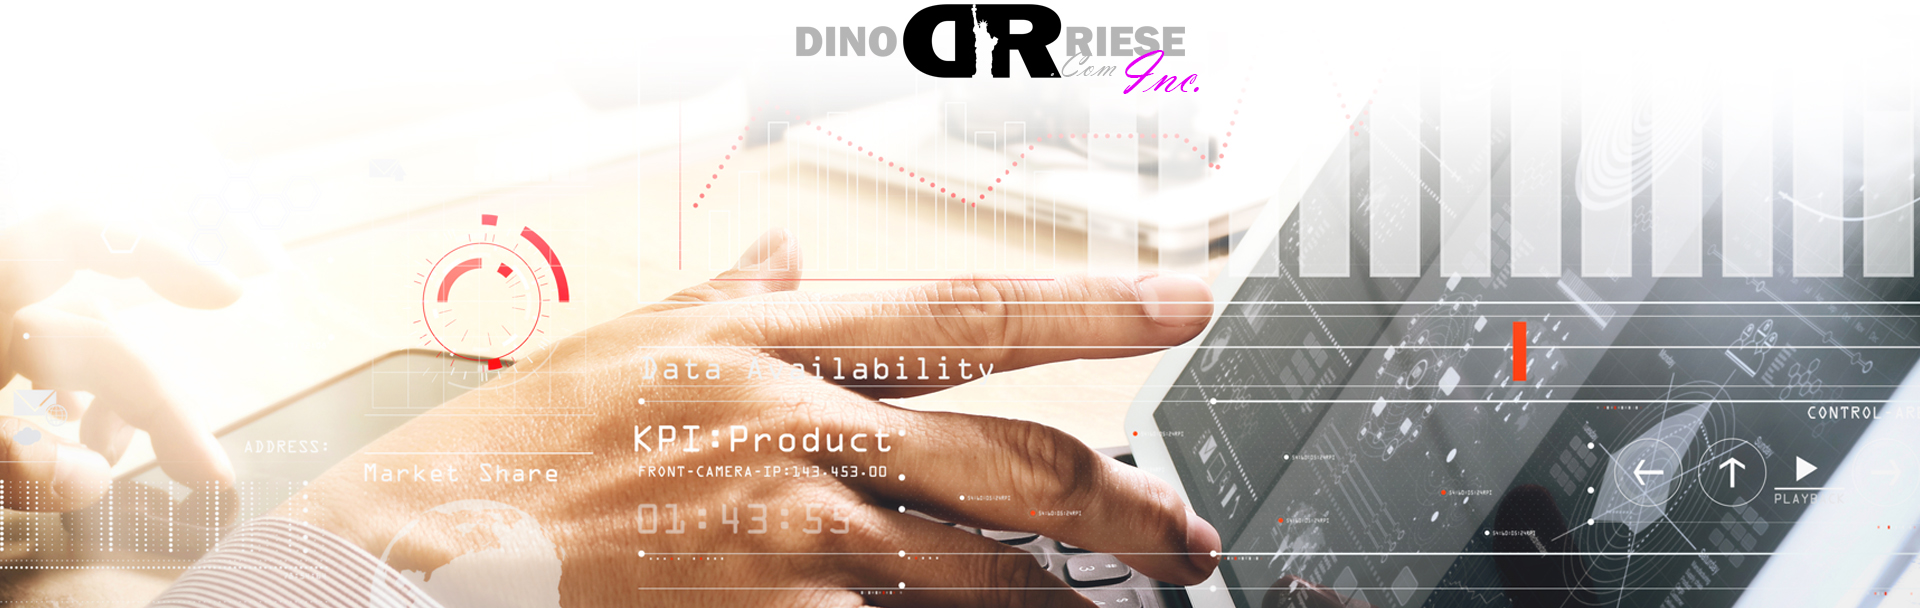 Google Analytics Reports | DinoRiese.com Inc. - Image